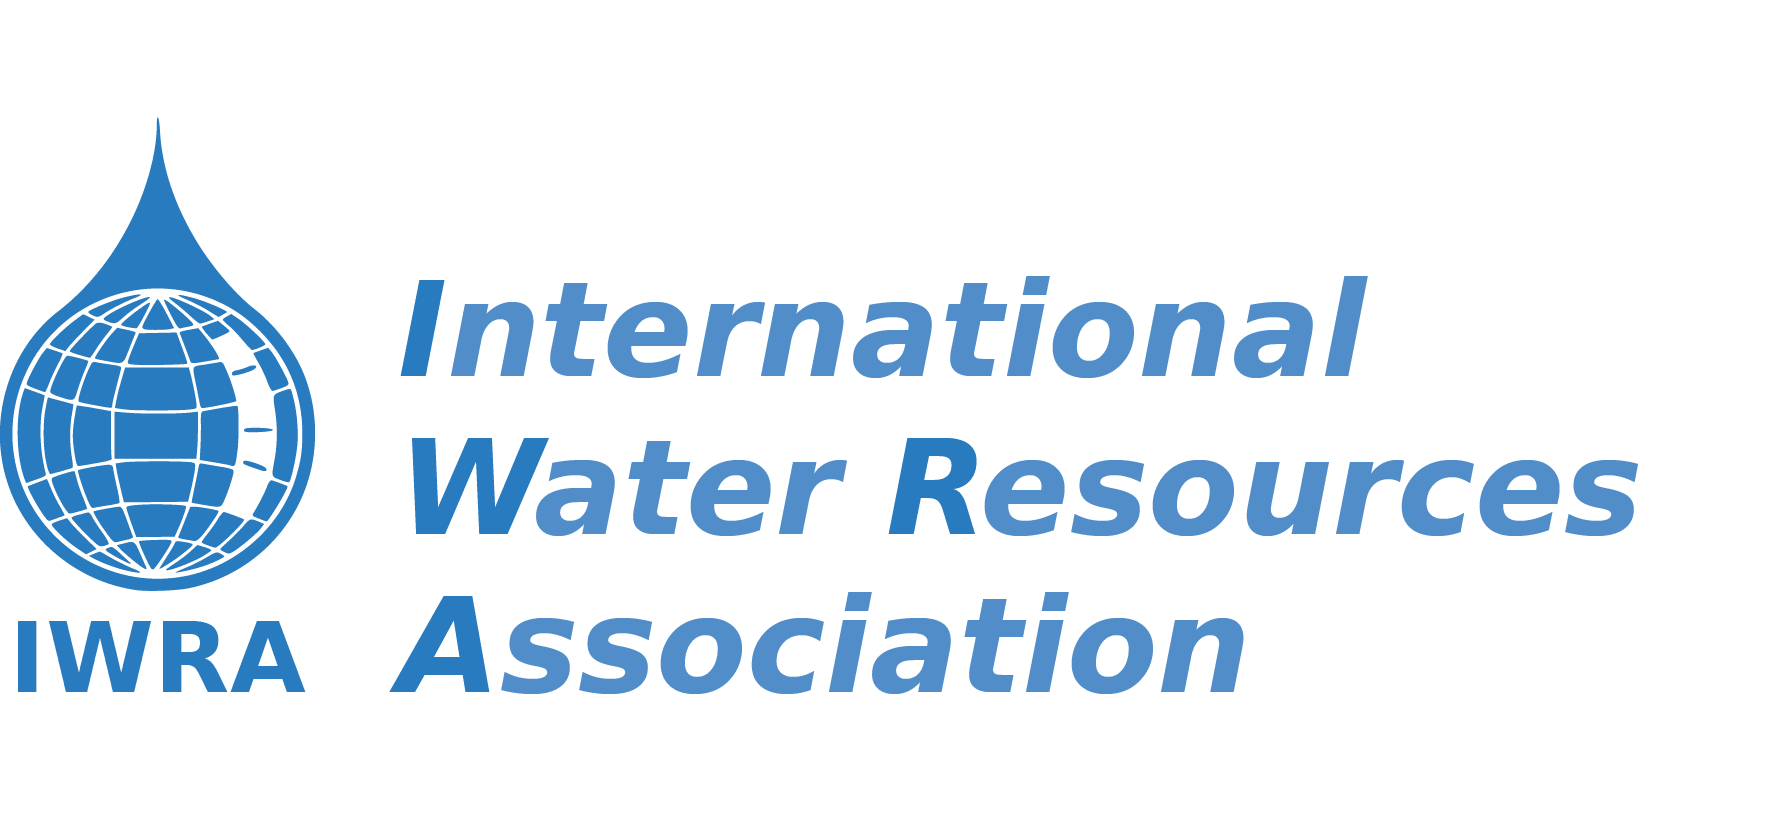 International Water Ressources Association logo